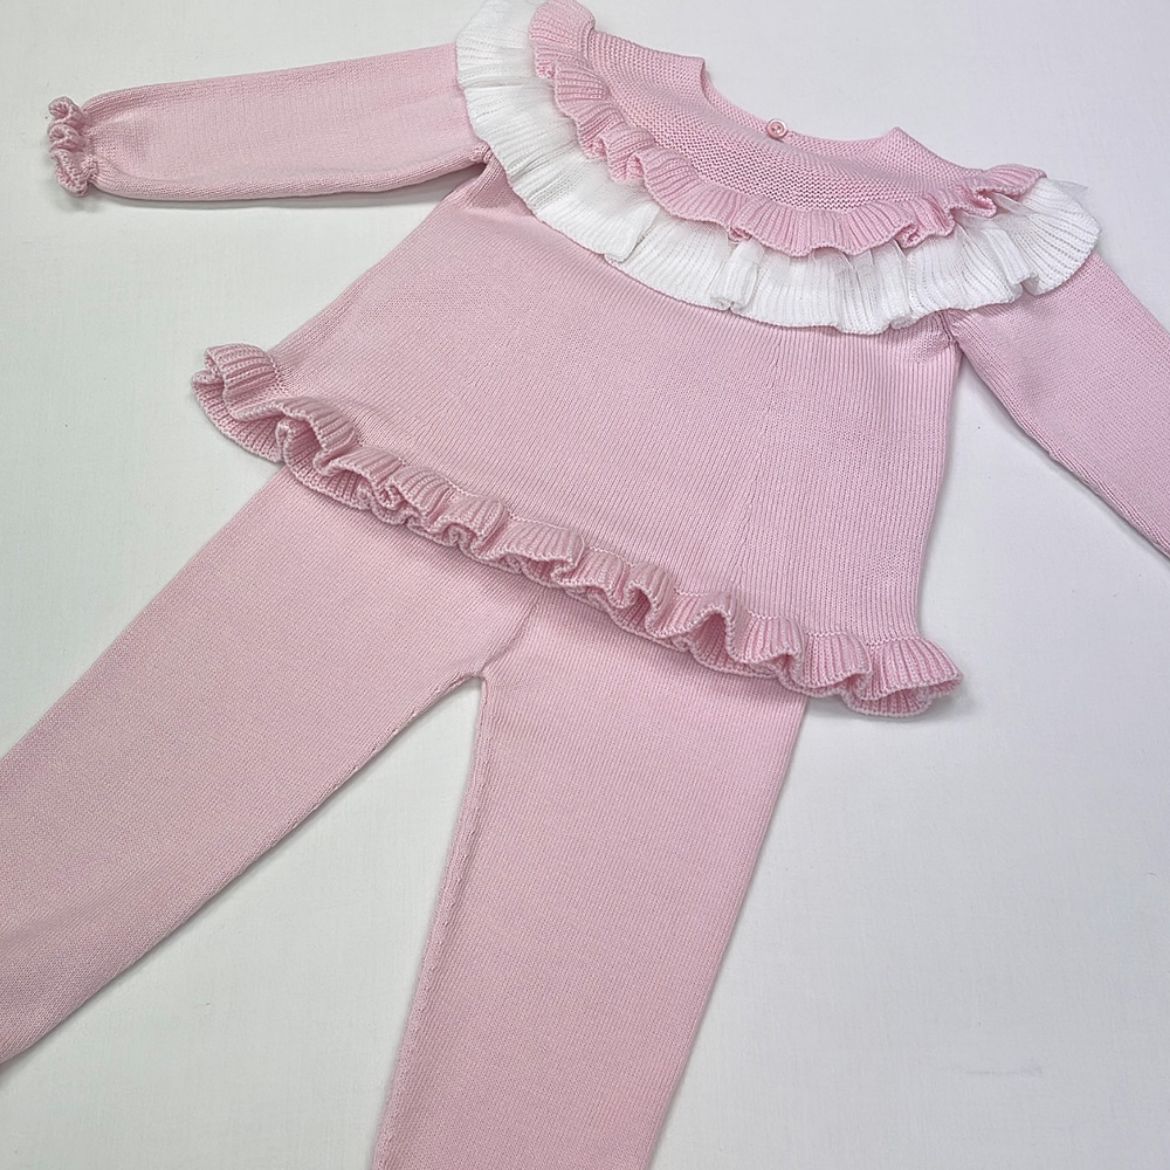 Picture of Granlei Girls Pink Knitted Legging Set